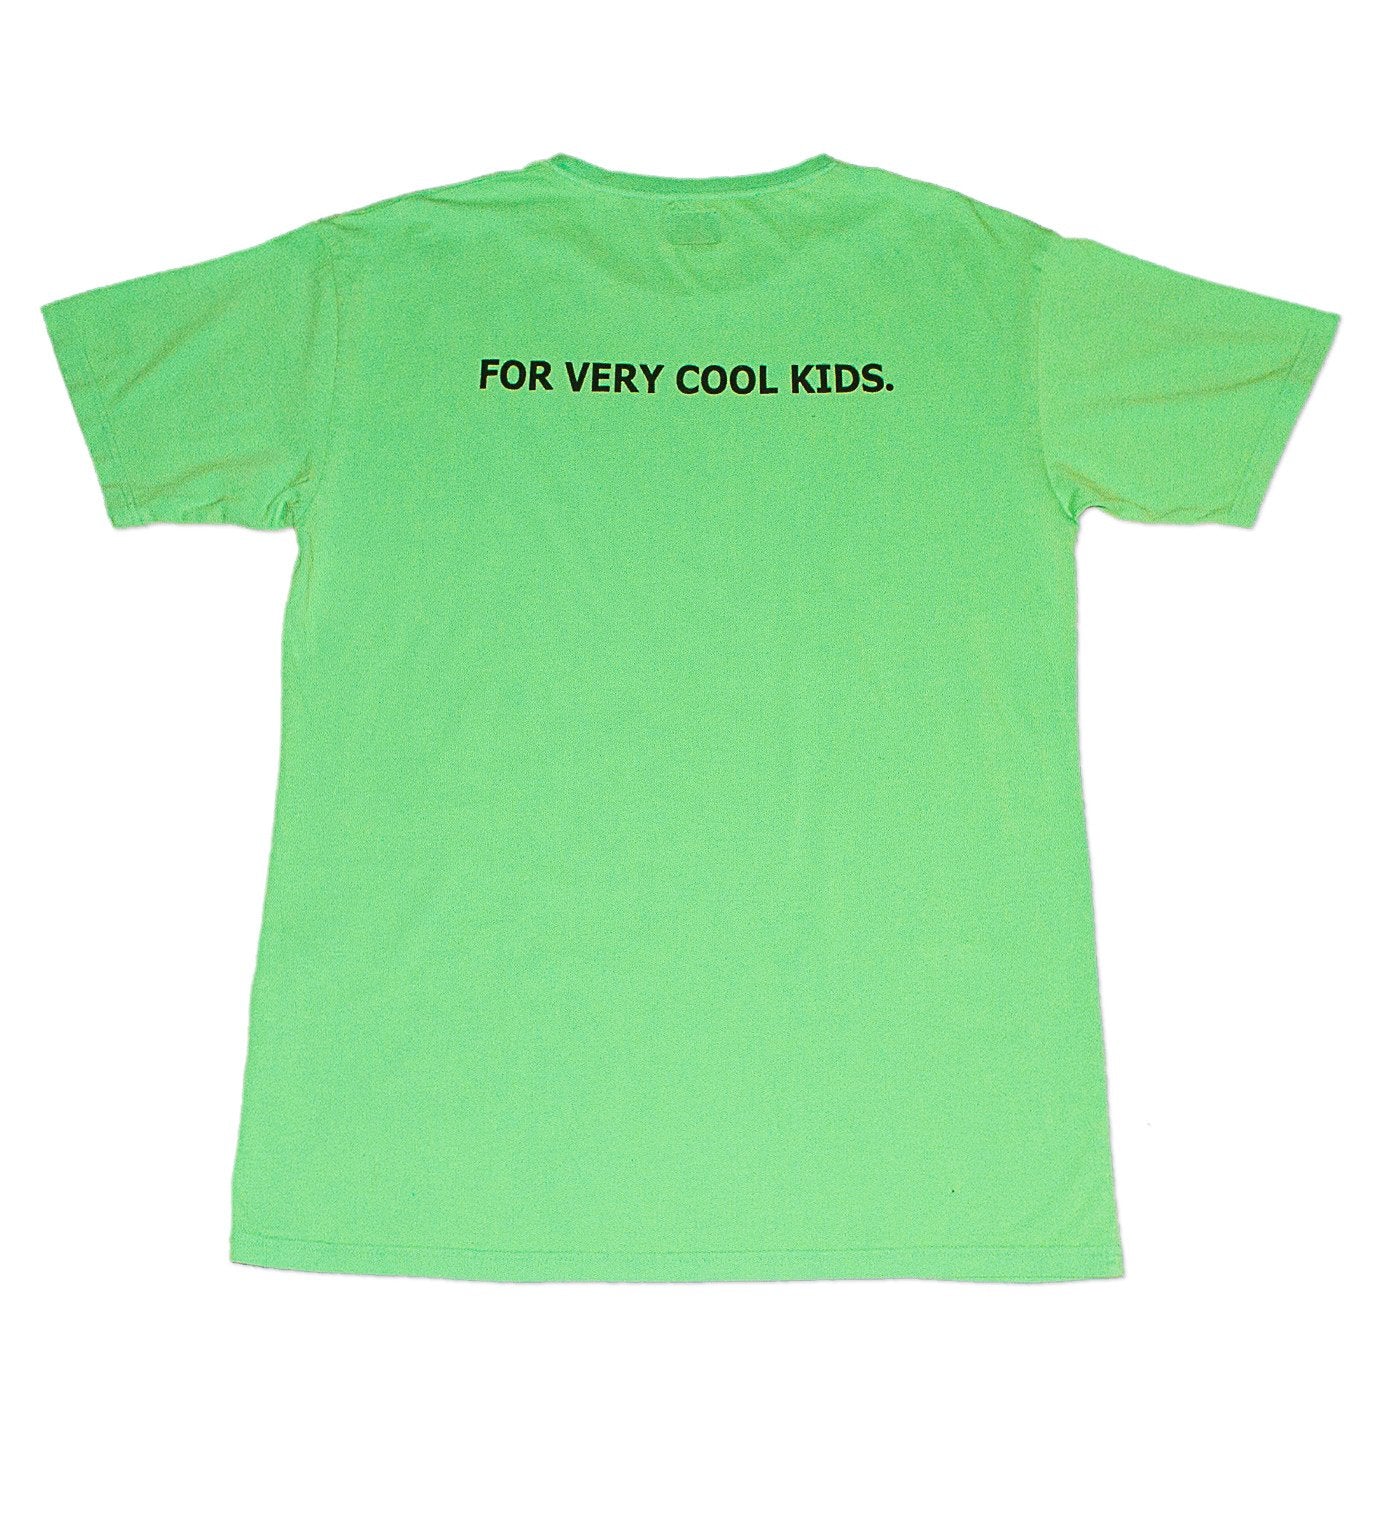 tshirt - skate - streetwear - cool - lime green - motto - citadium - mrcnoir -fvck - forverycoolkids - benibla